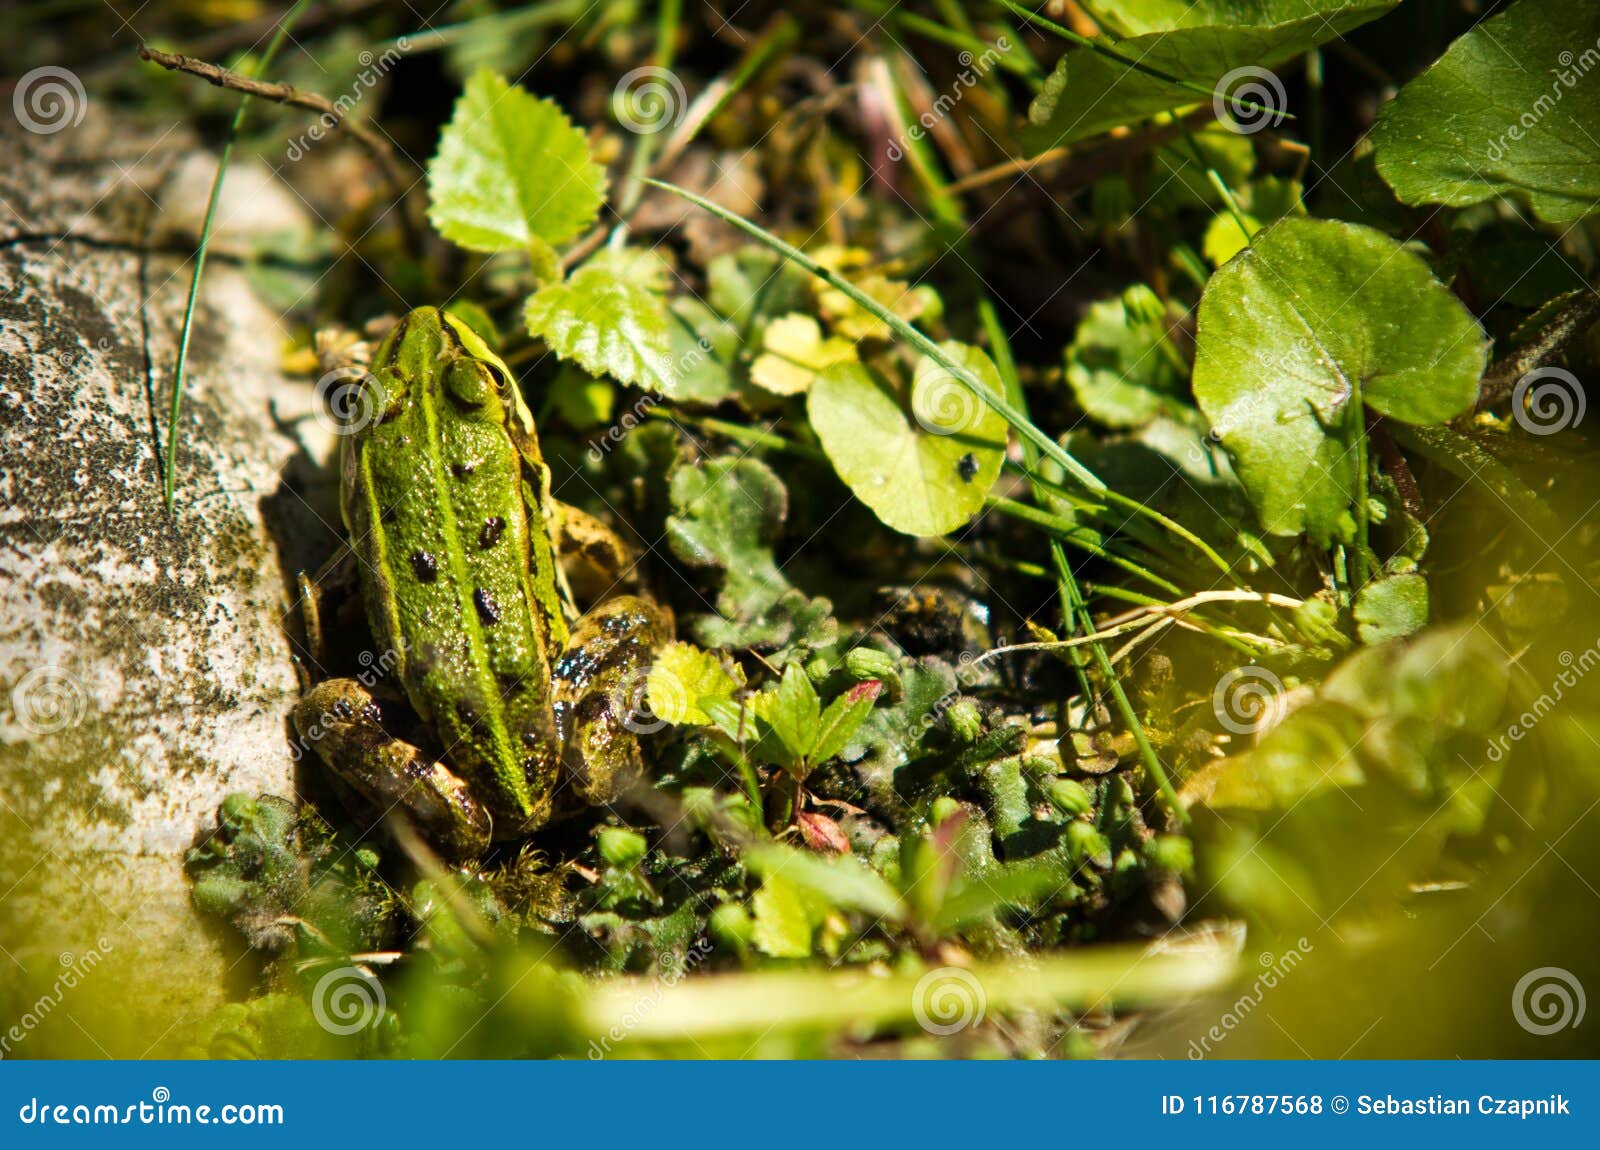 polish fauna: little green frog in pond